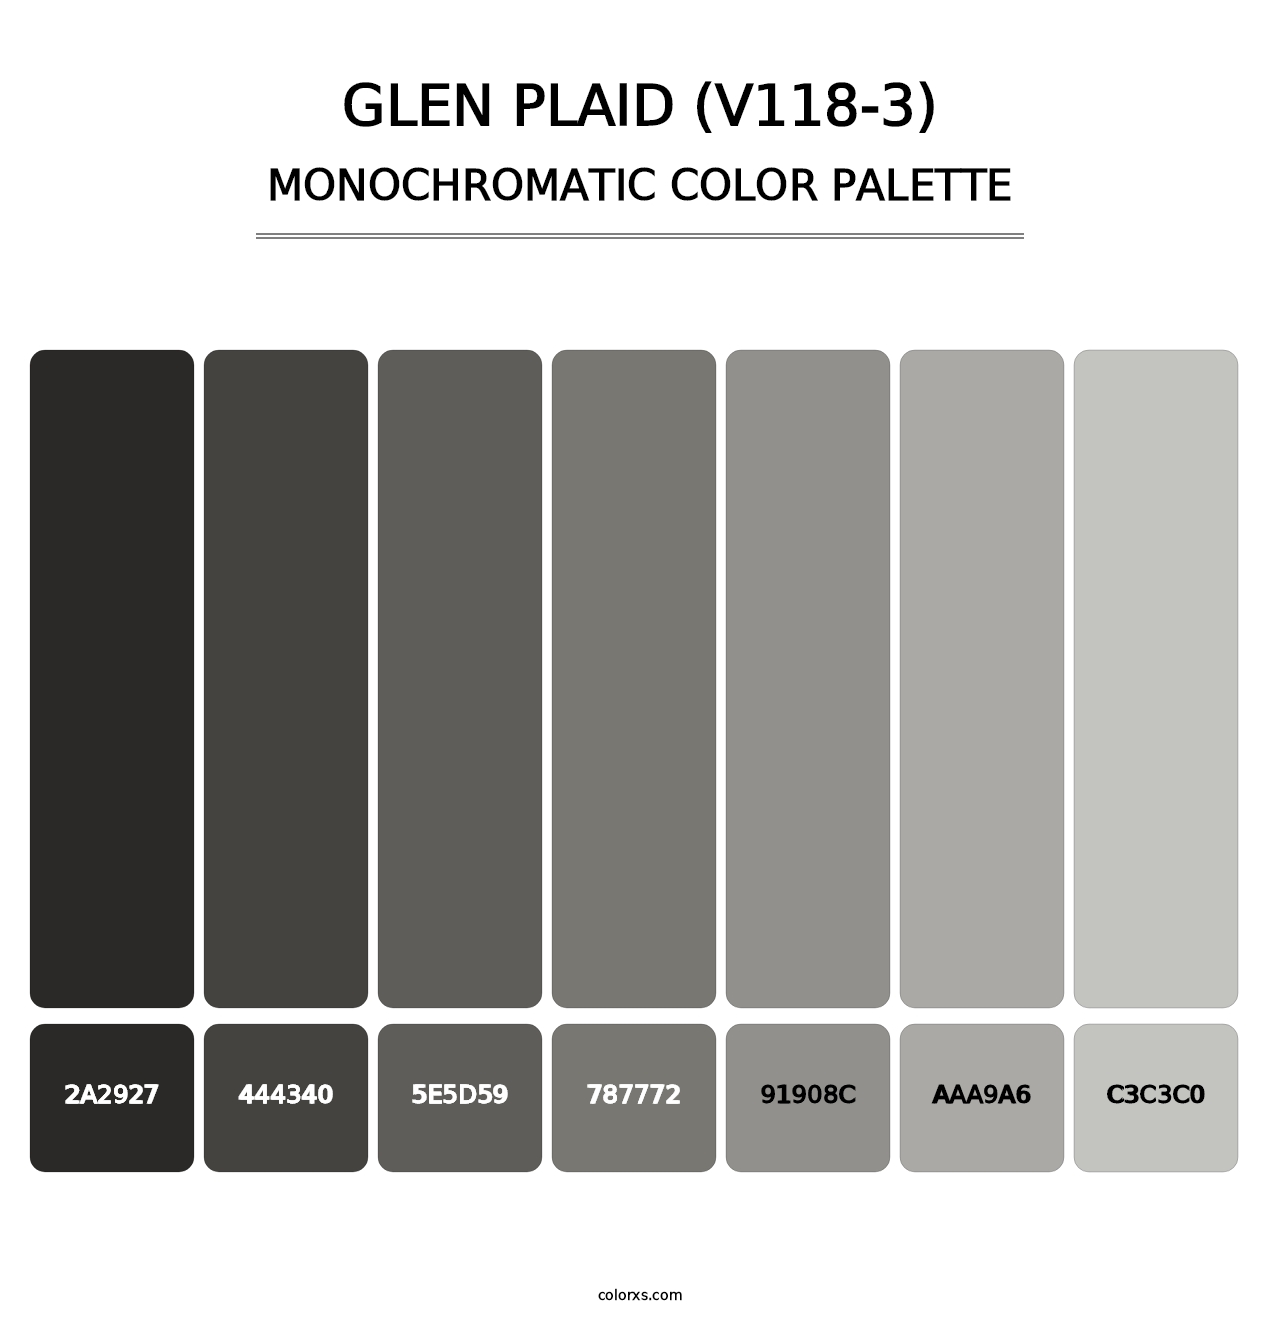 Glen Plaid (V118-3) - Monochromatic Color Palette